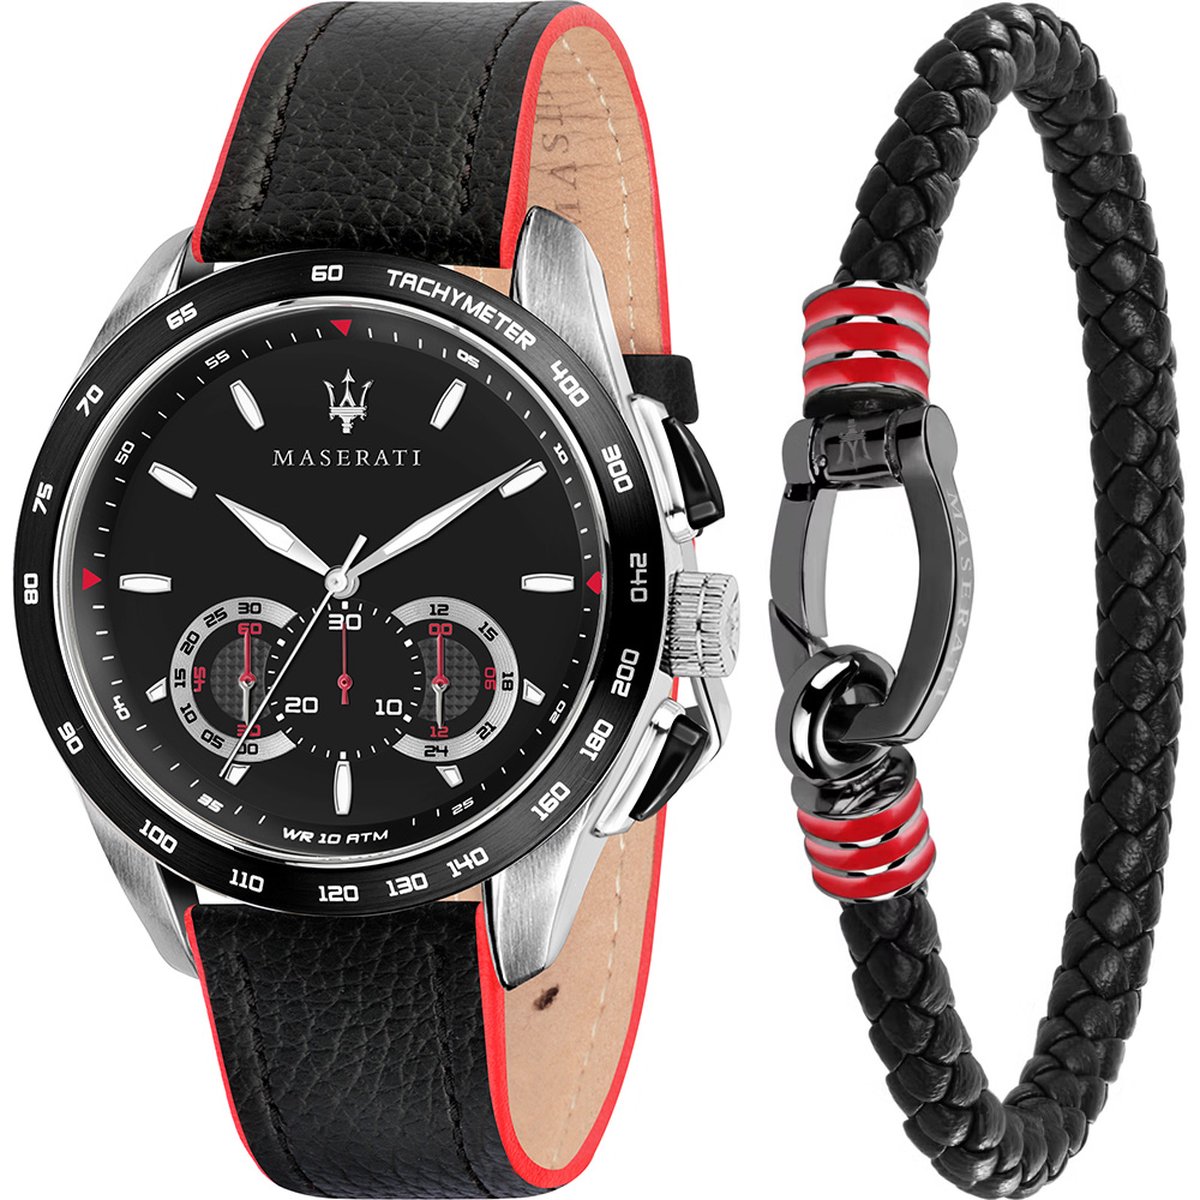 Maserati - Heren Horloge Traguardo Cadeauset - Zwart-Rood - Gratis Armband